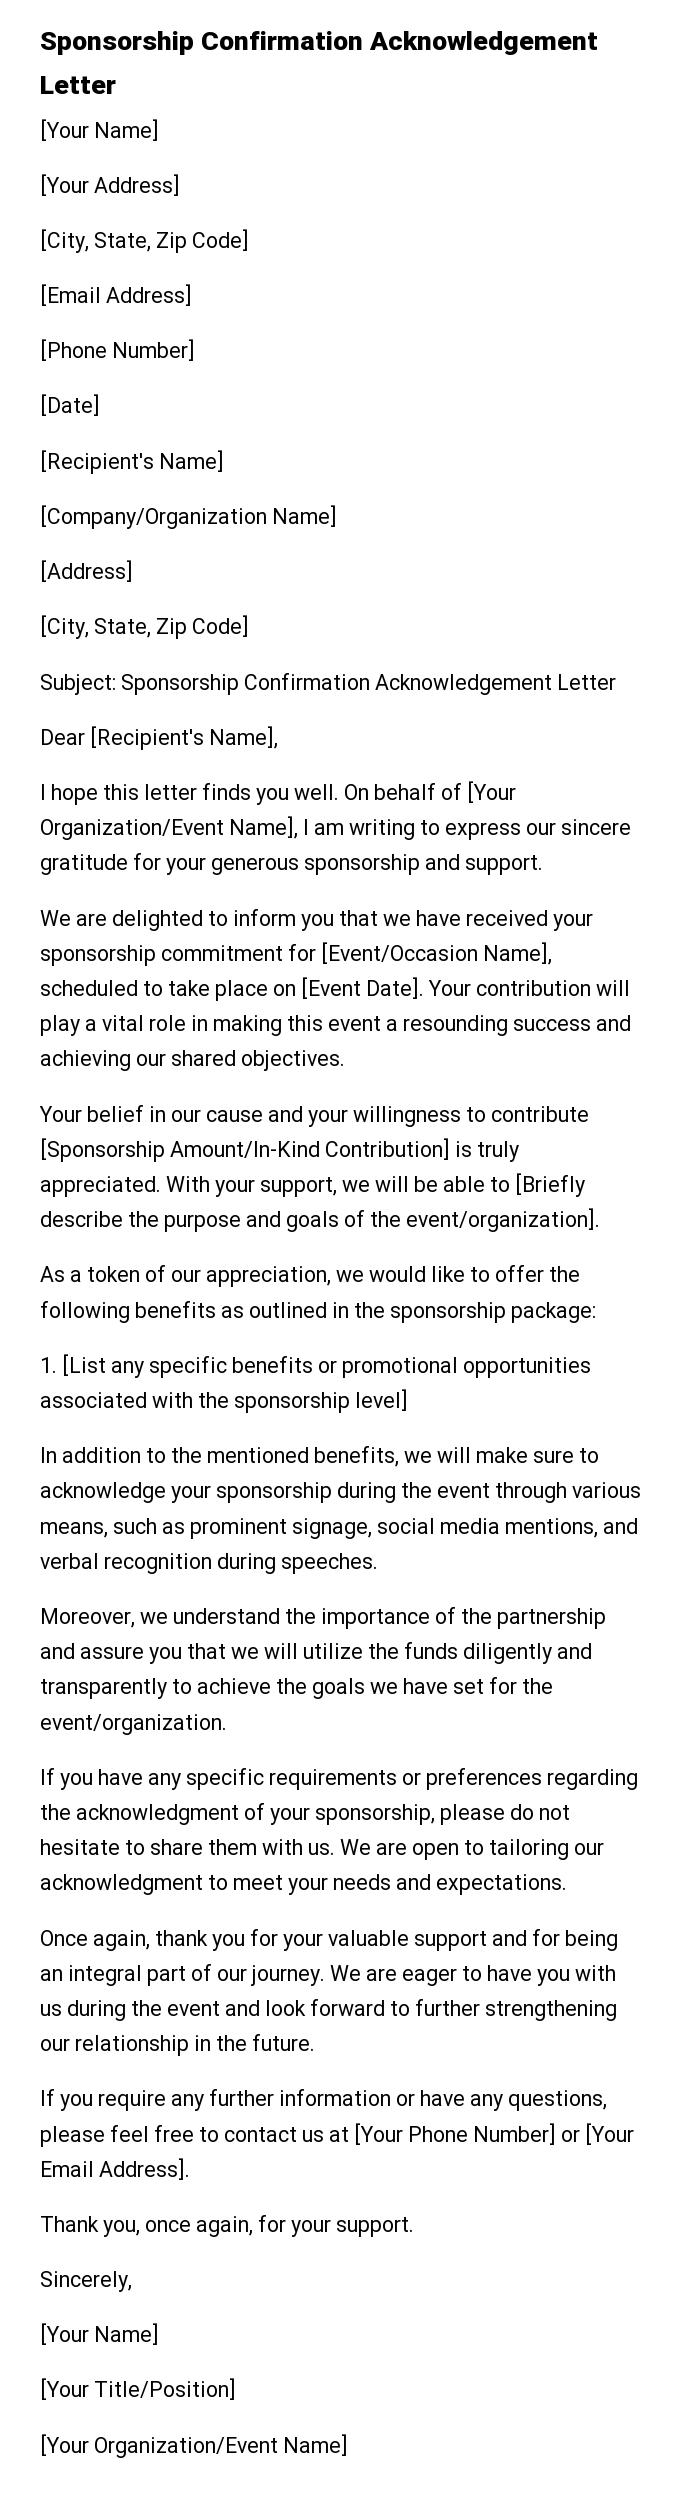 Sponsorship Confirmation Acknowledgement Letter